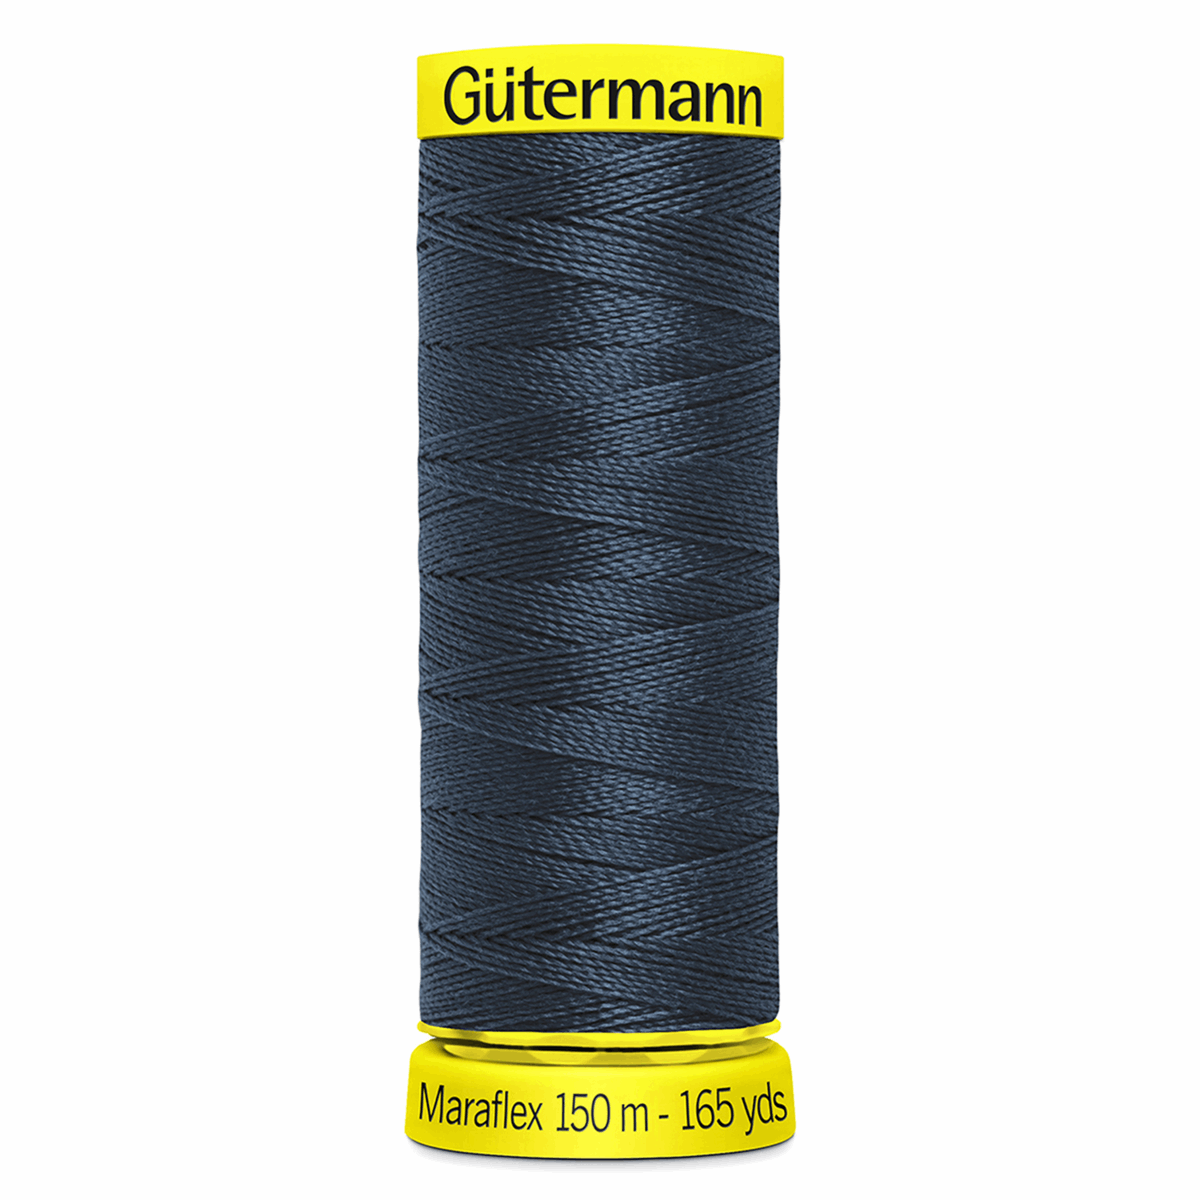 Gutermann Maraflex Elastic Sewing Thread 150m Dark Denim 339